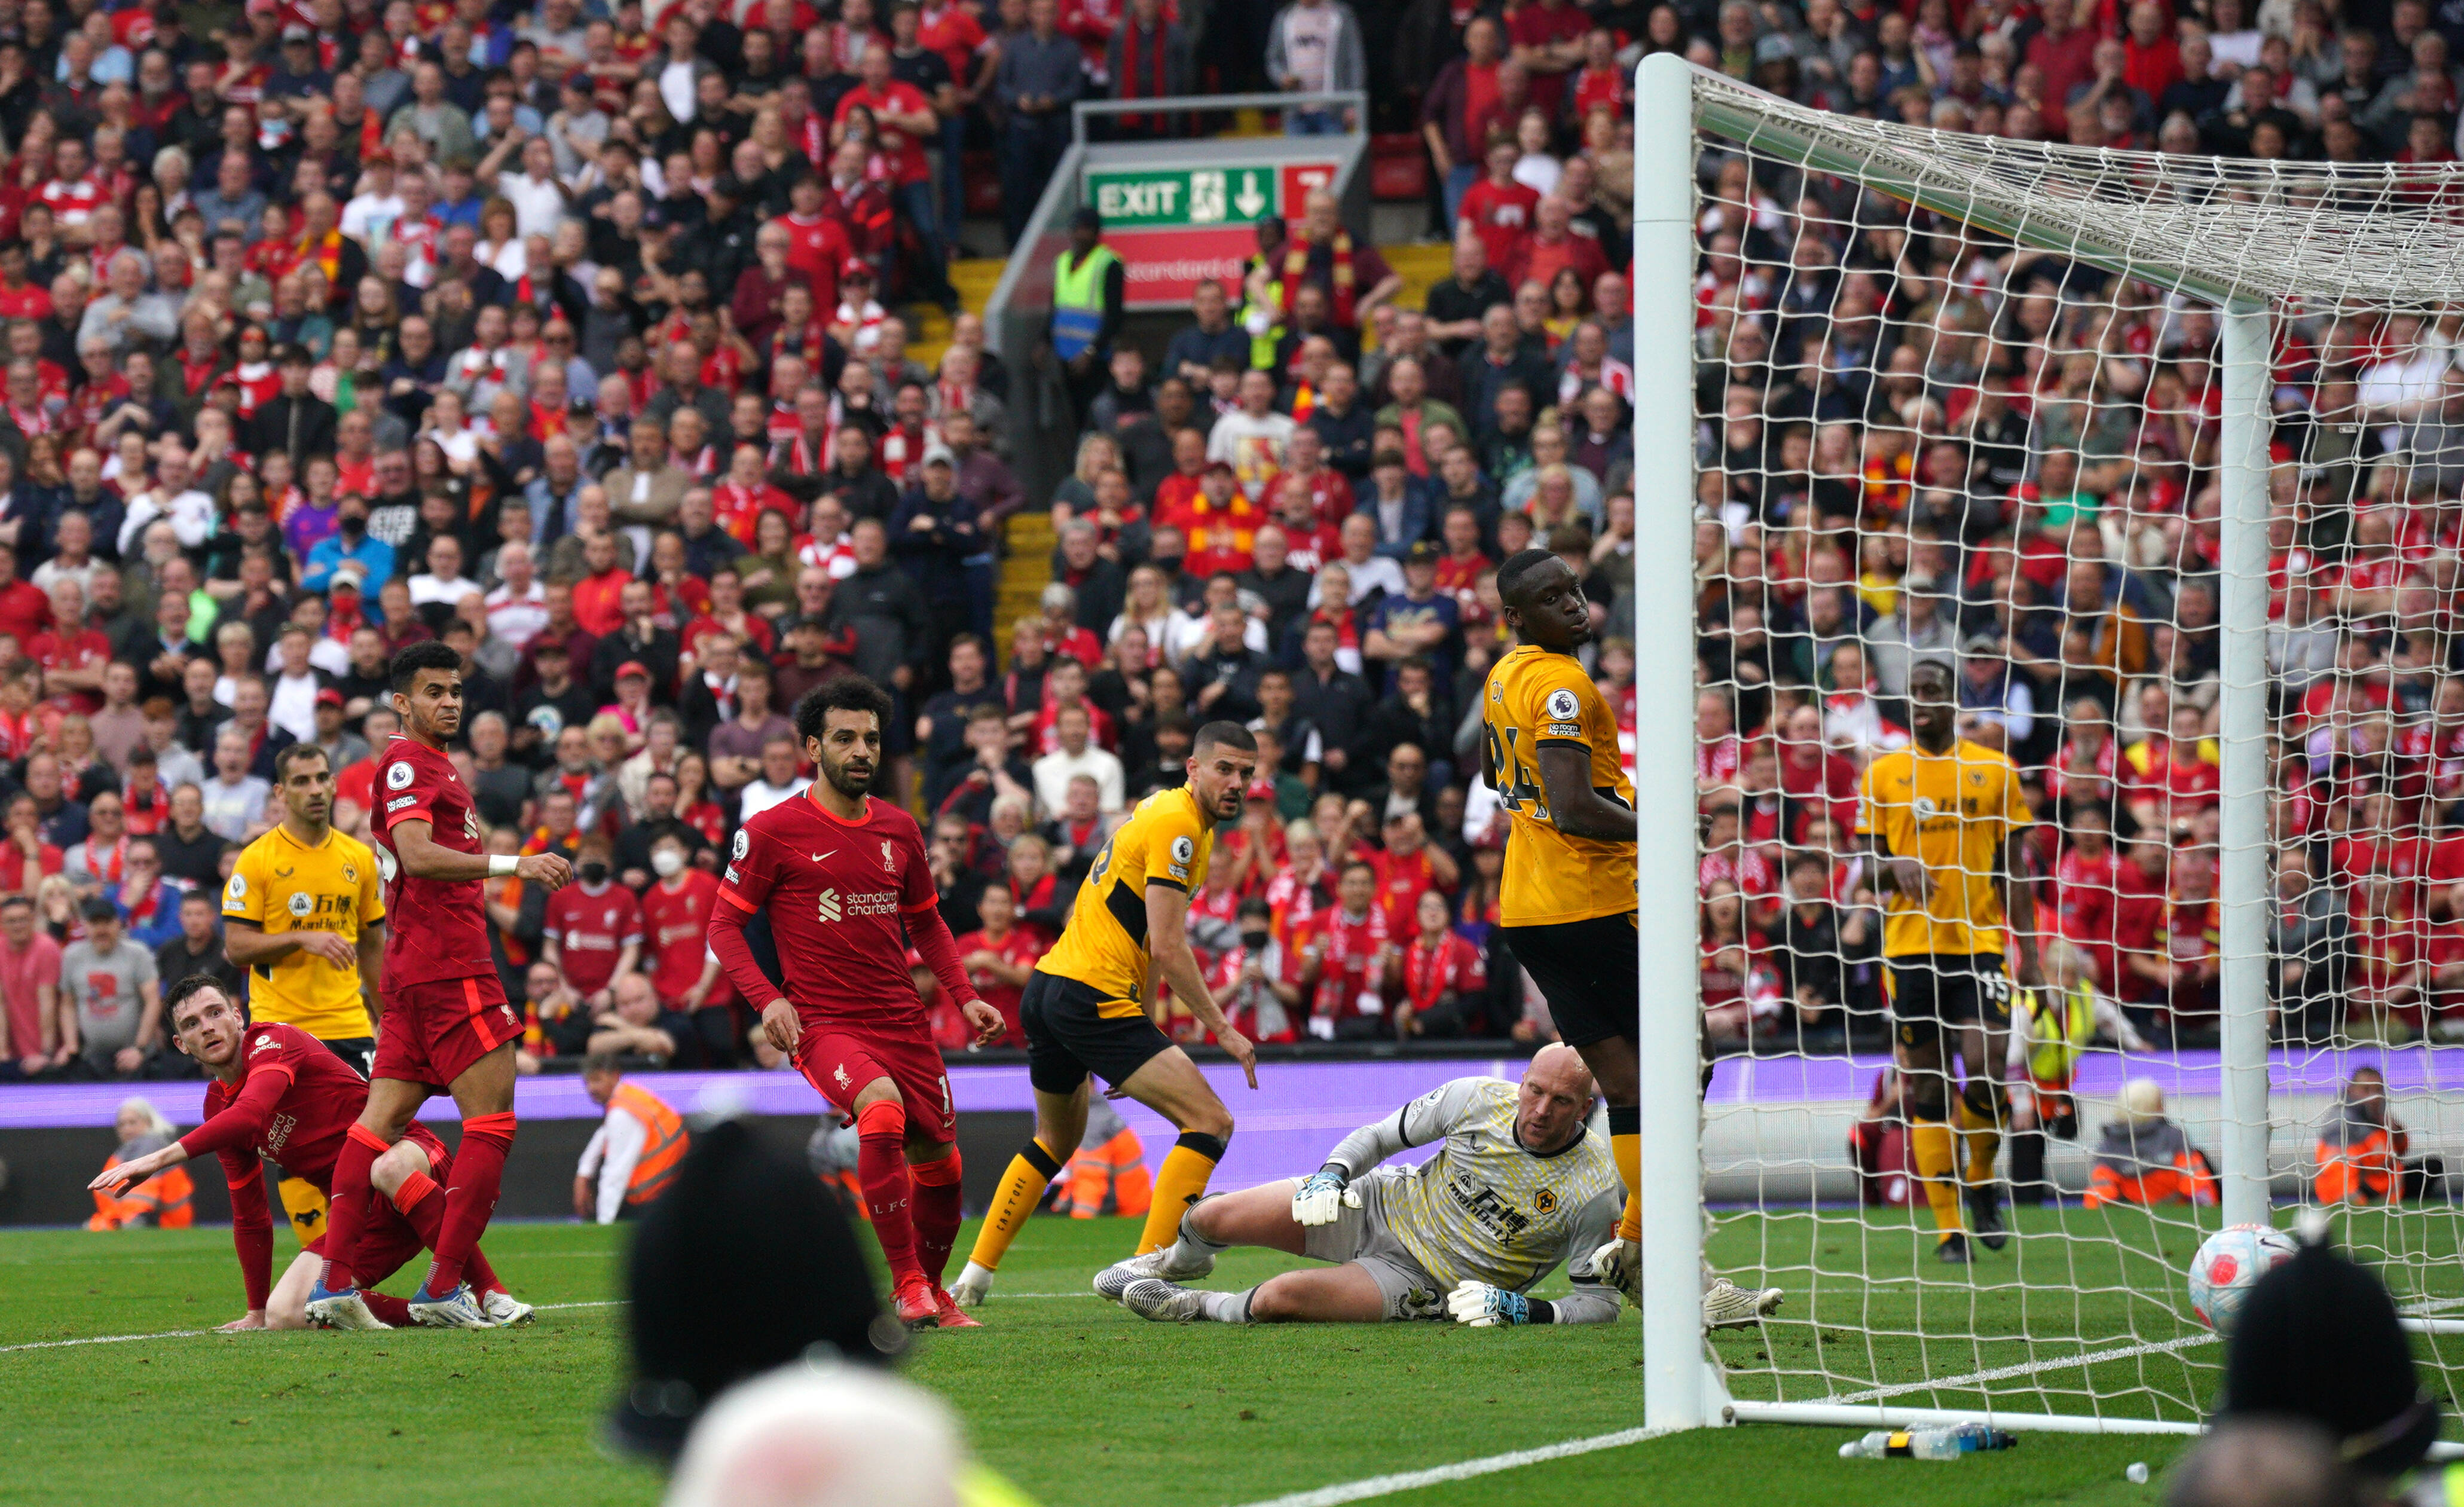 Liverpool narrowly fall short of Premier League title despite comfortable win